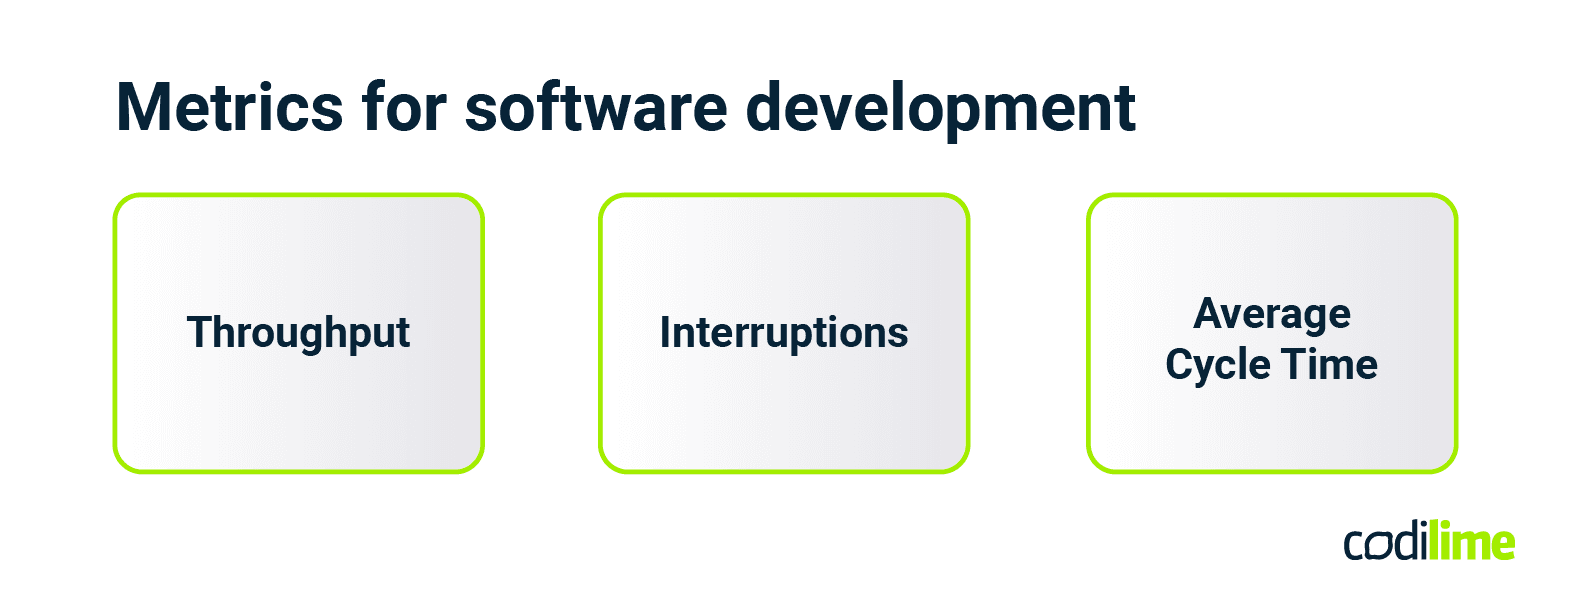 Metrics for software development